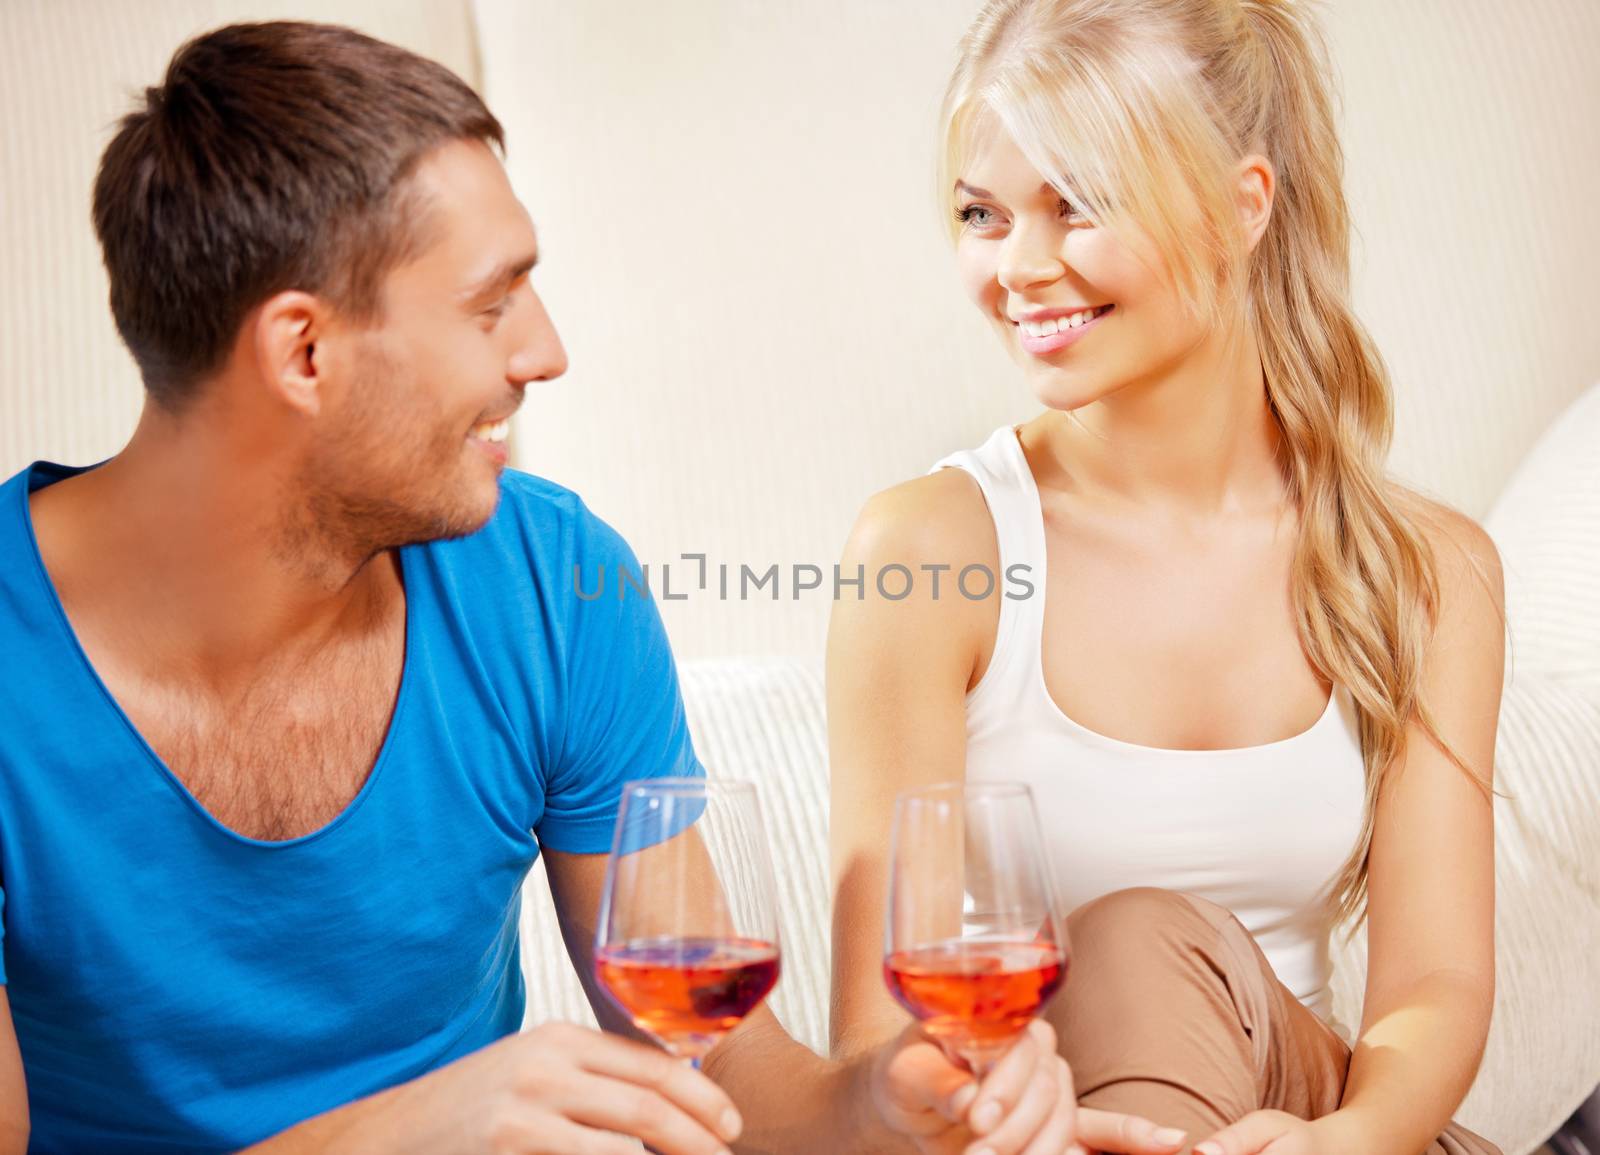 romantic couple drinking wine by dolgachov